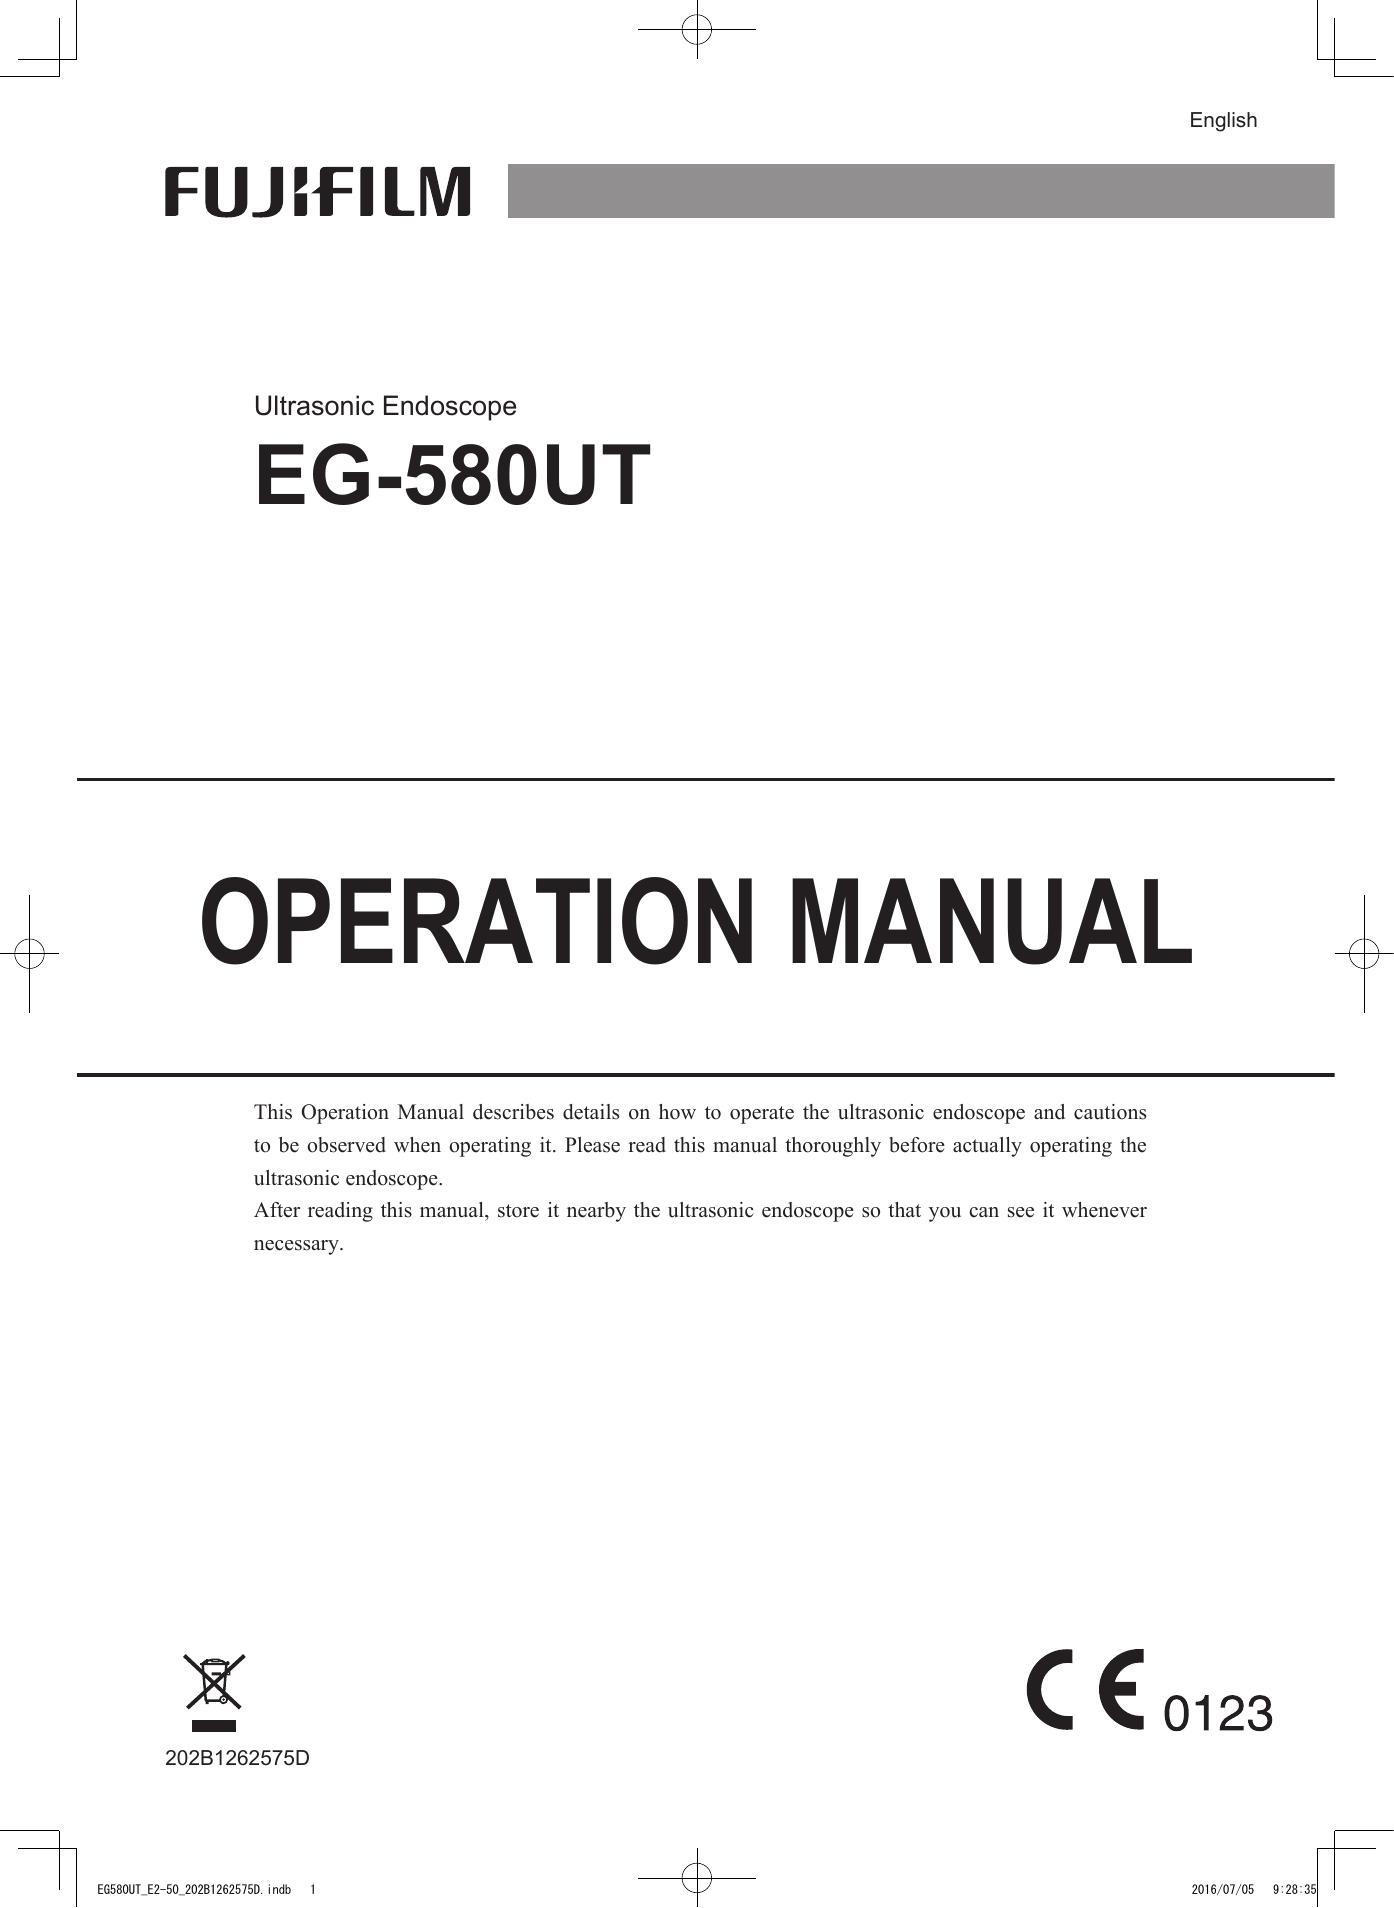 ultrasonic-endoscope-eg-580ut-operation-manual.pdf